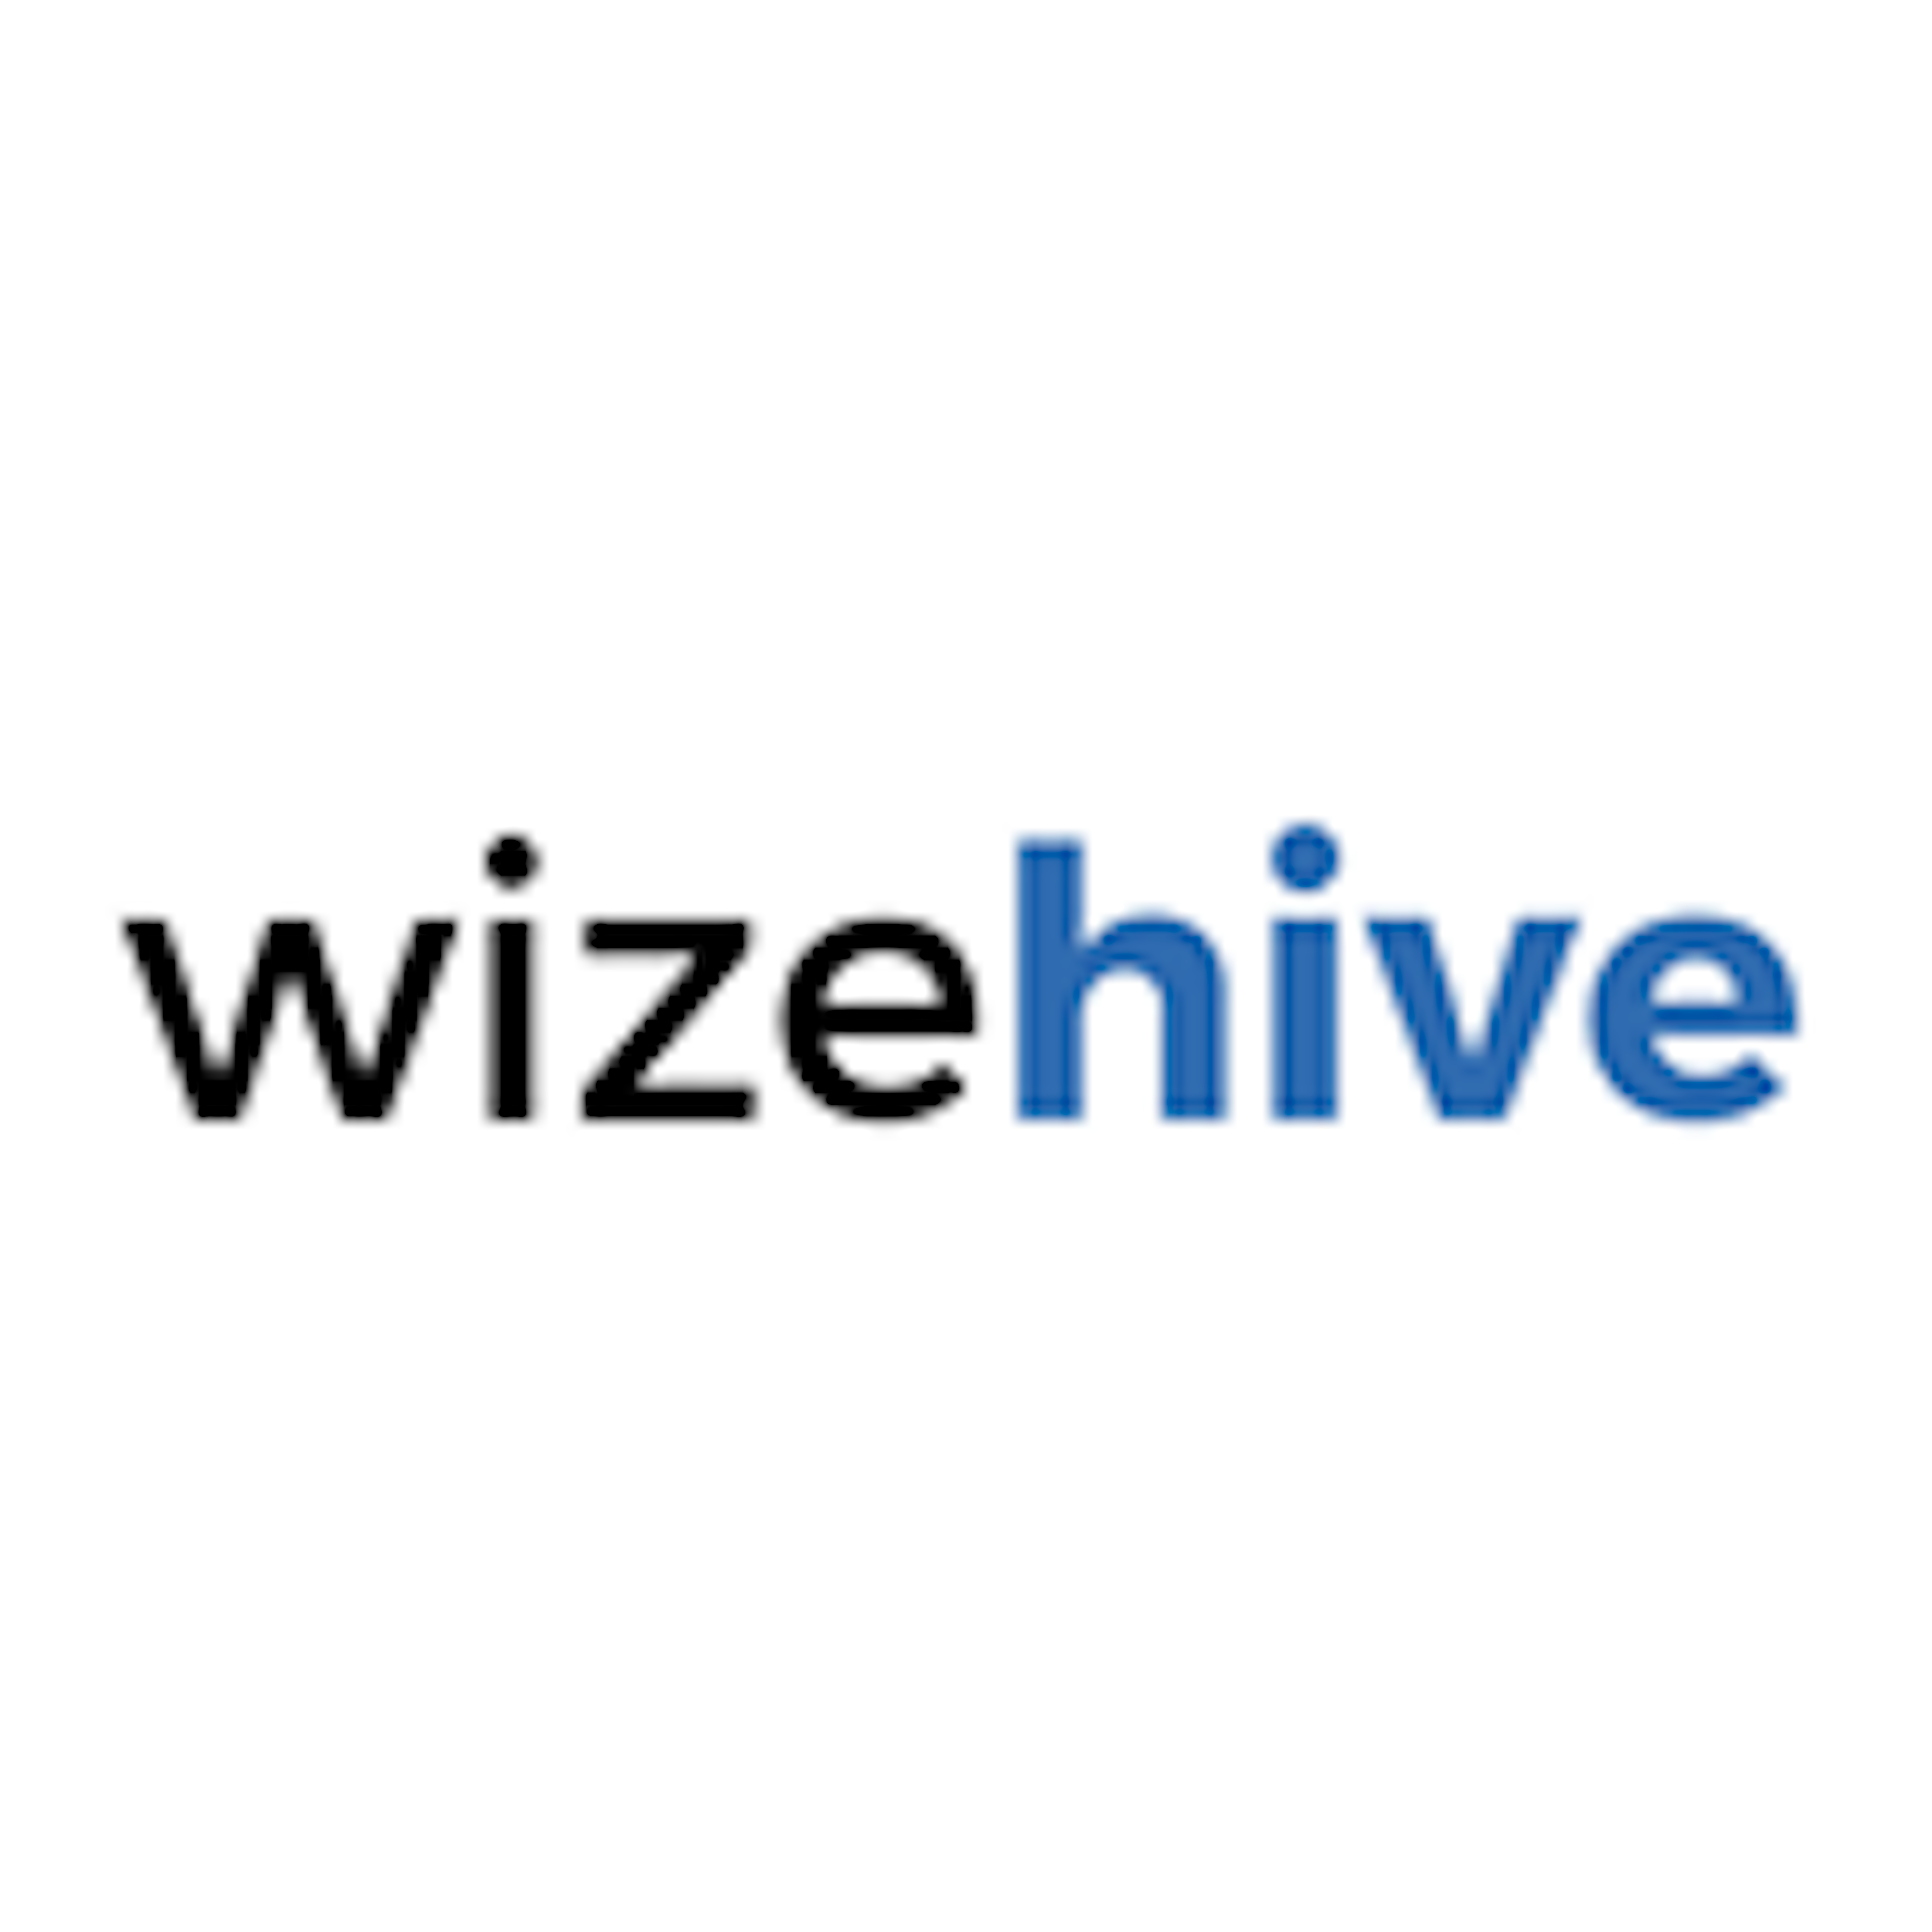 WizeHive Logo